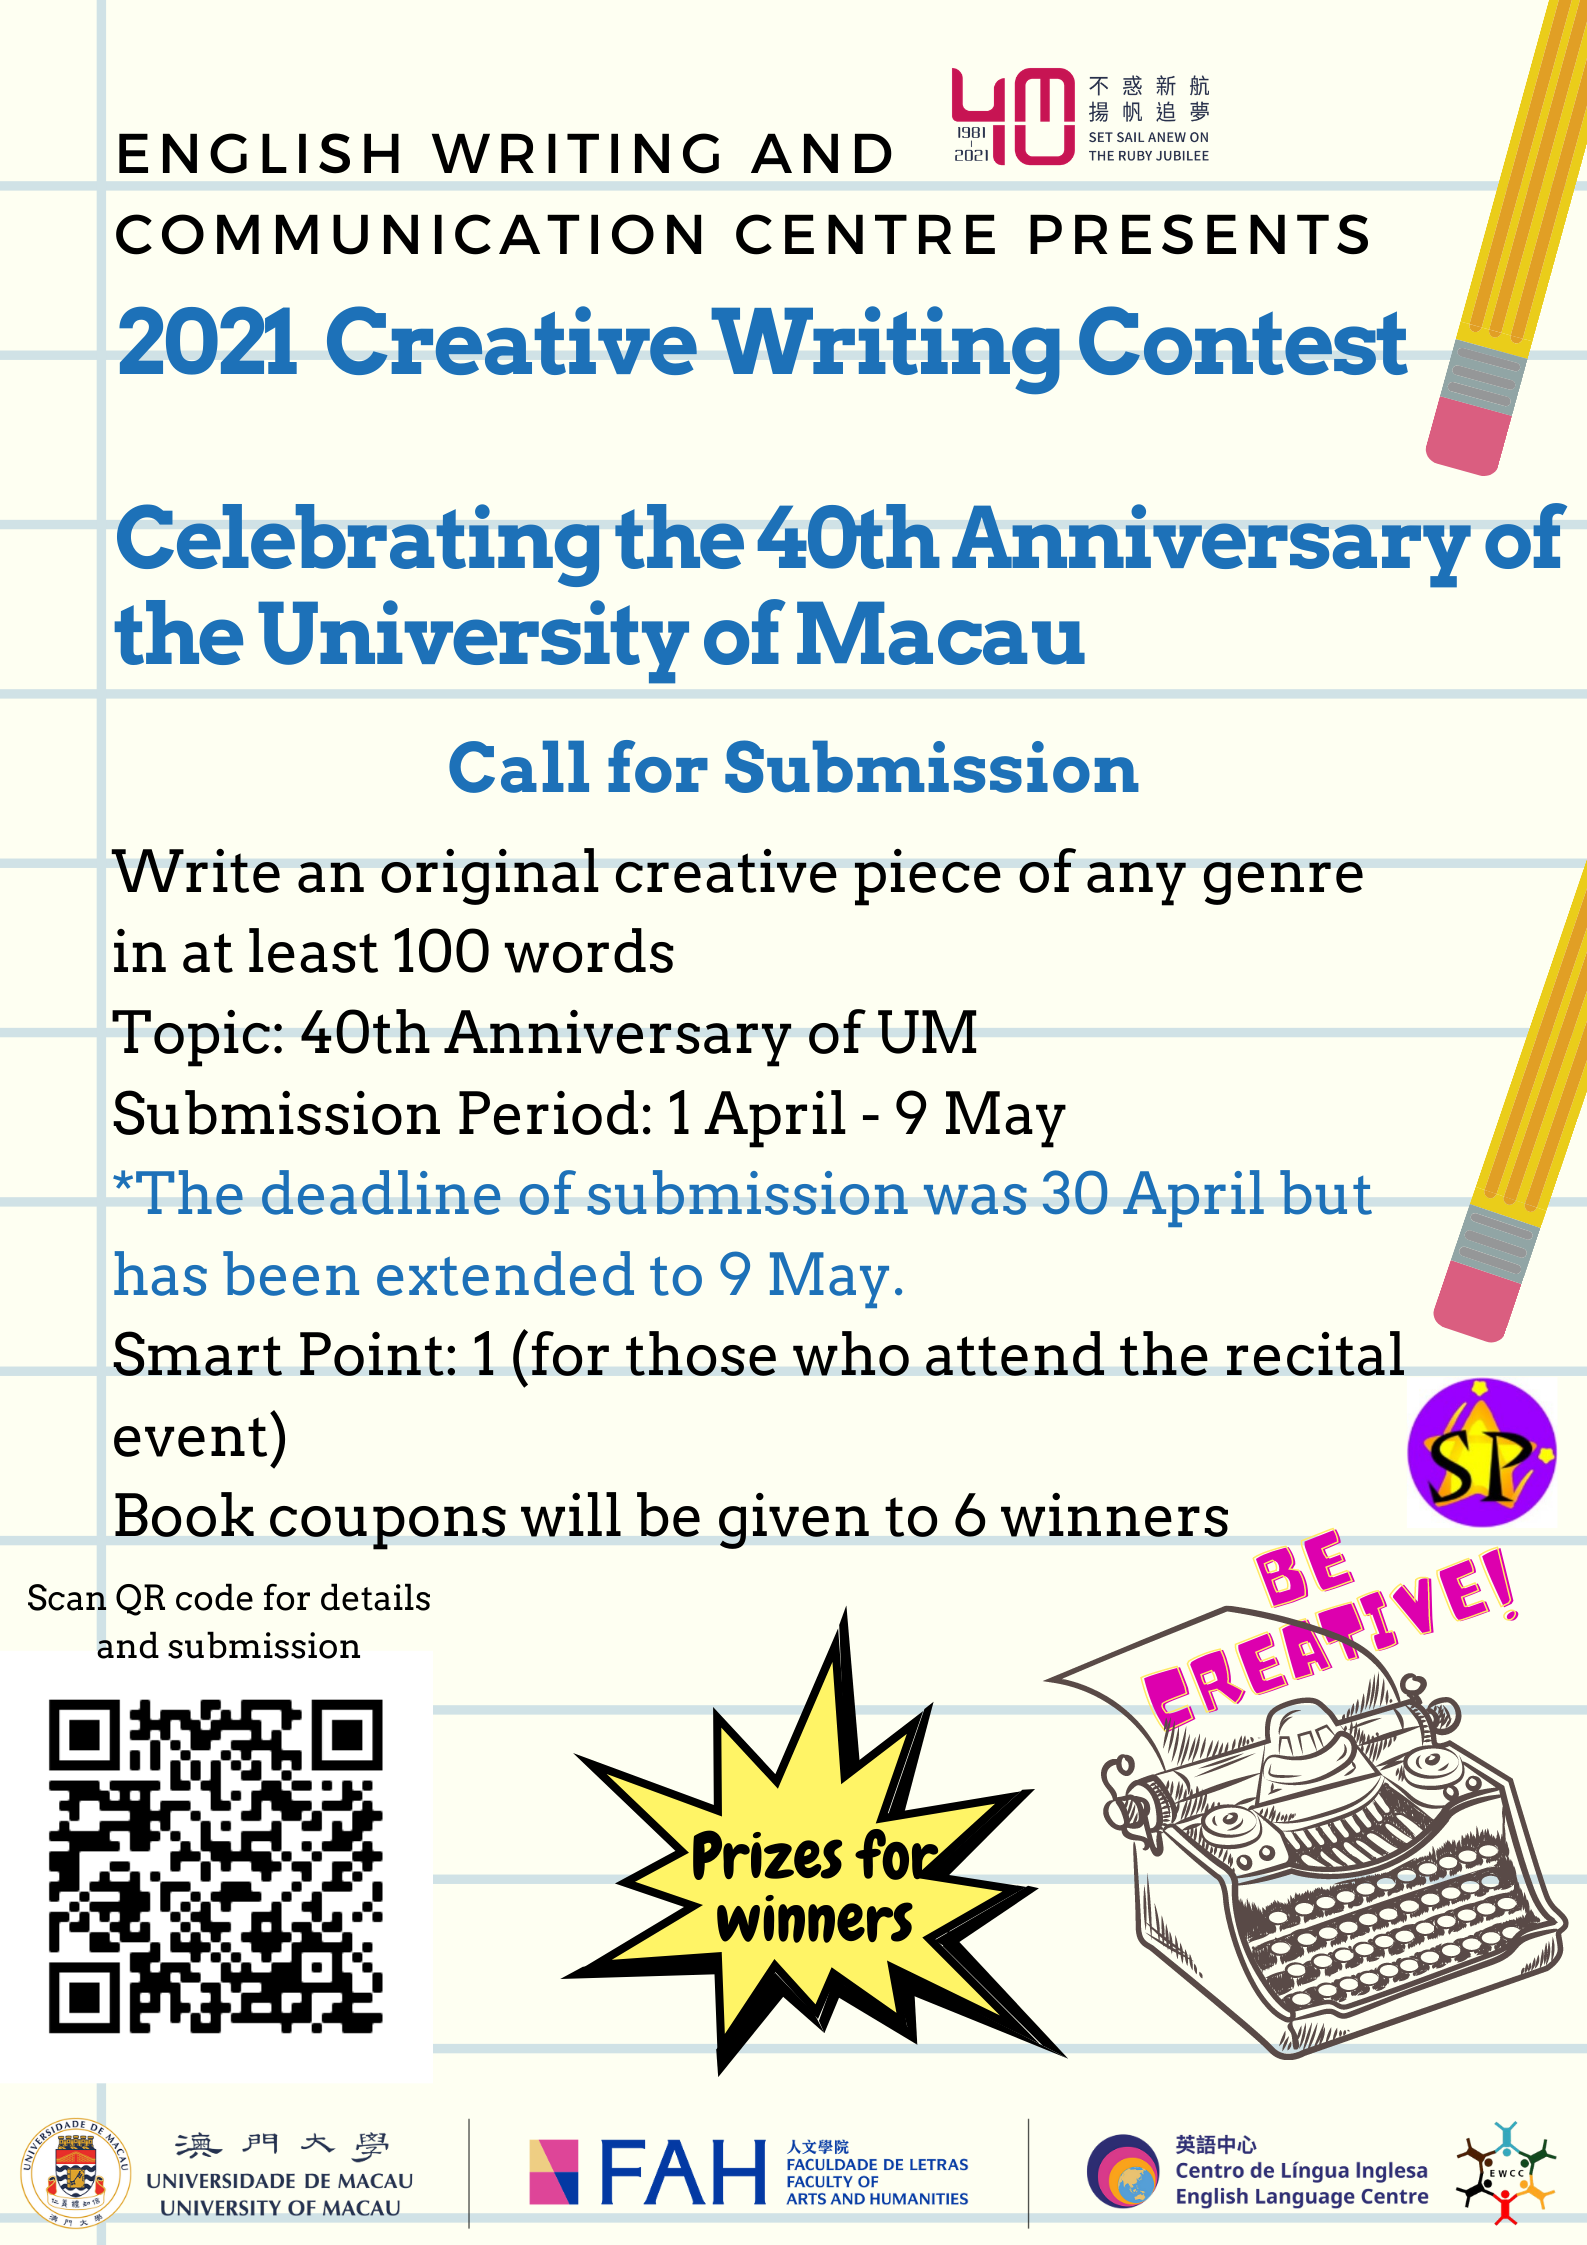 creative writing contest india